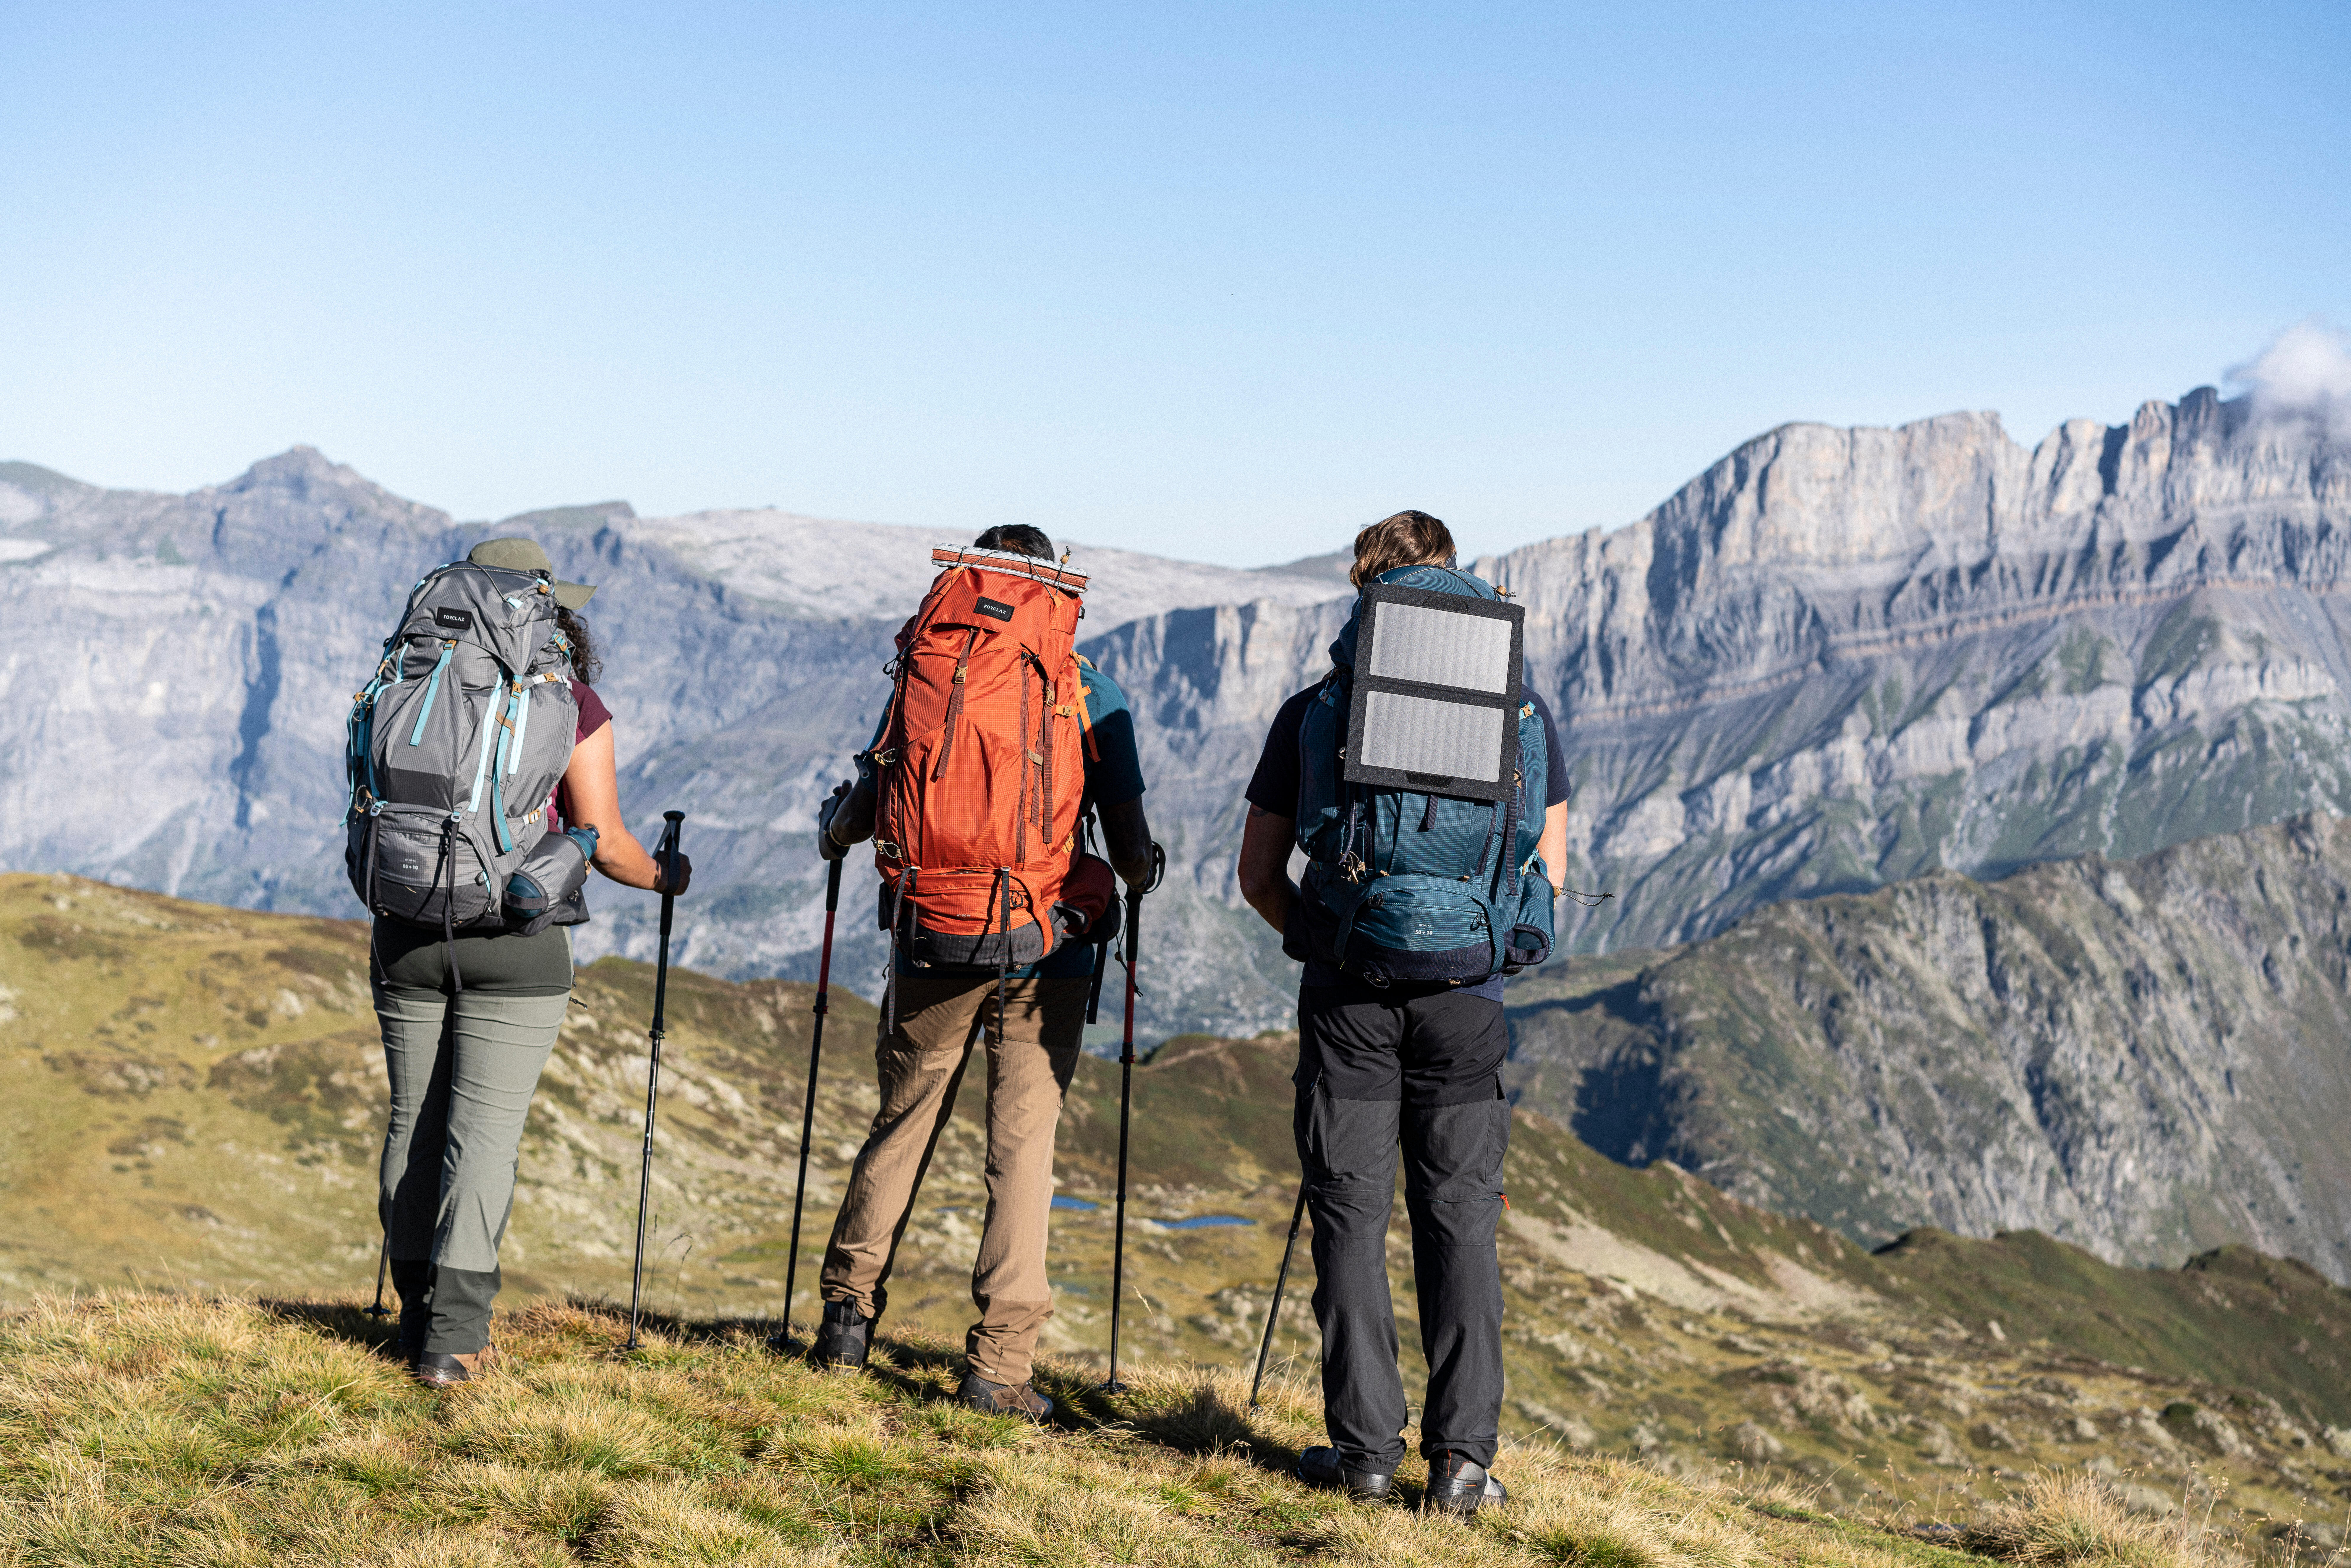 Men’s Hiking Backpack 50 L + 10 L  - MT 500 Air - FORCLAZ